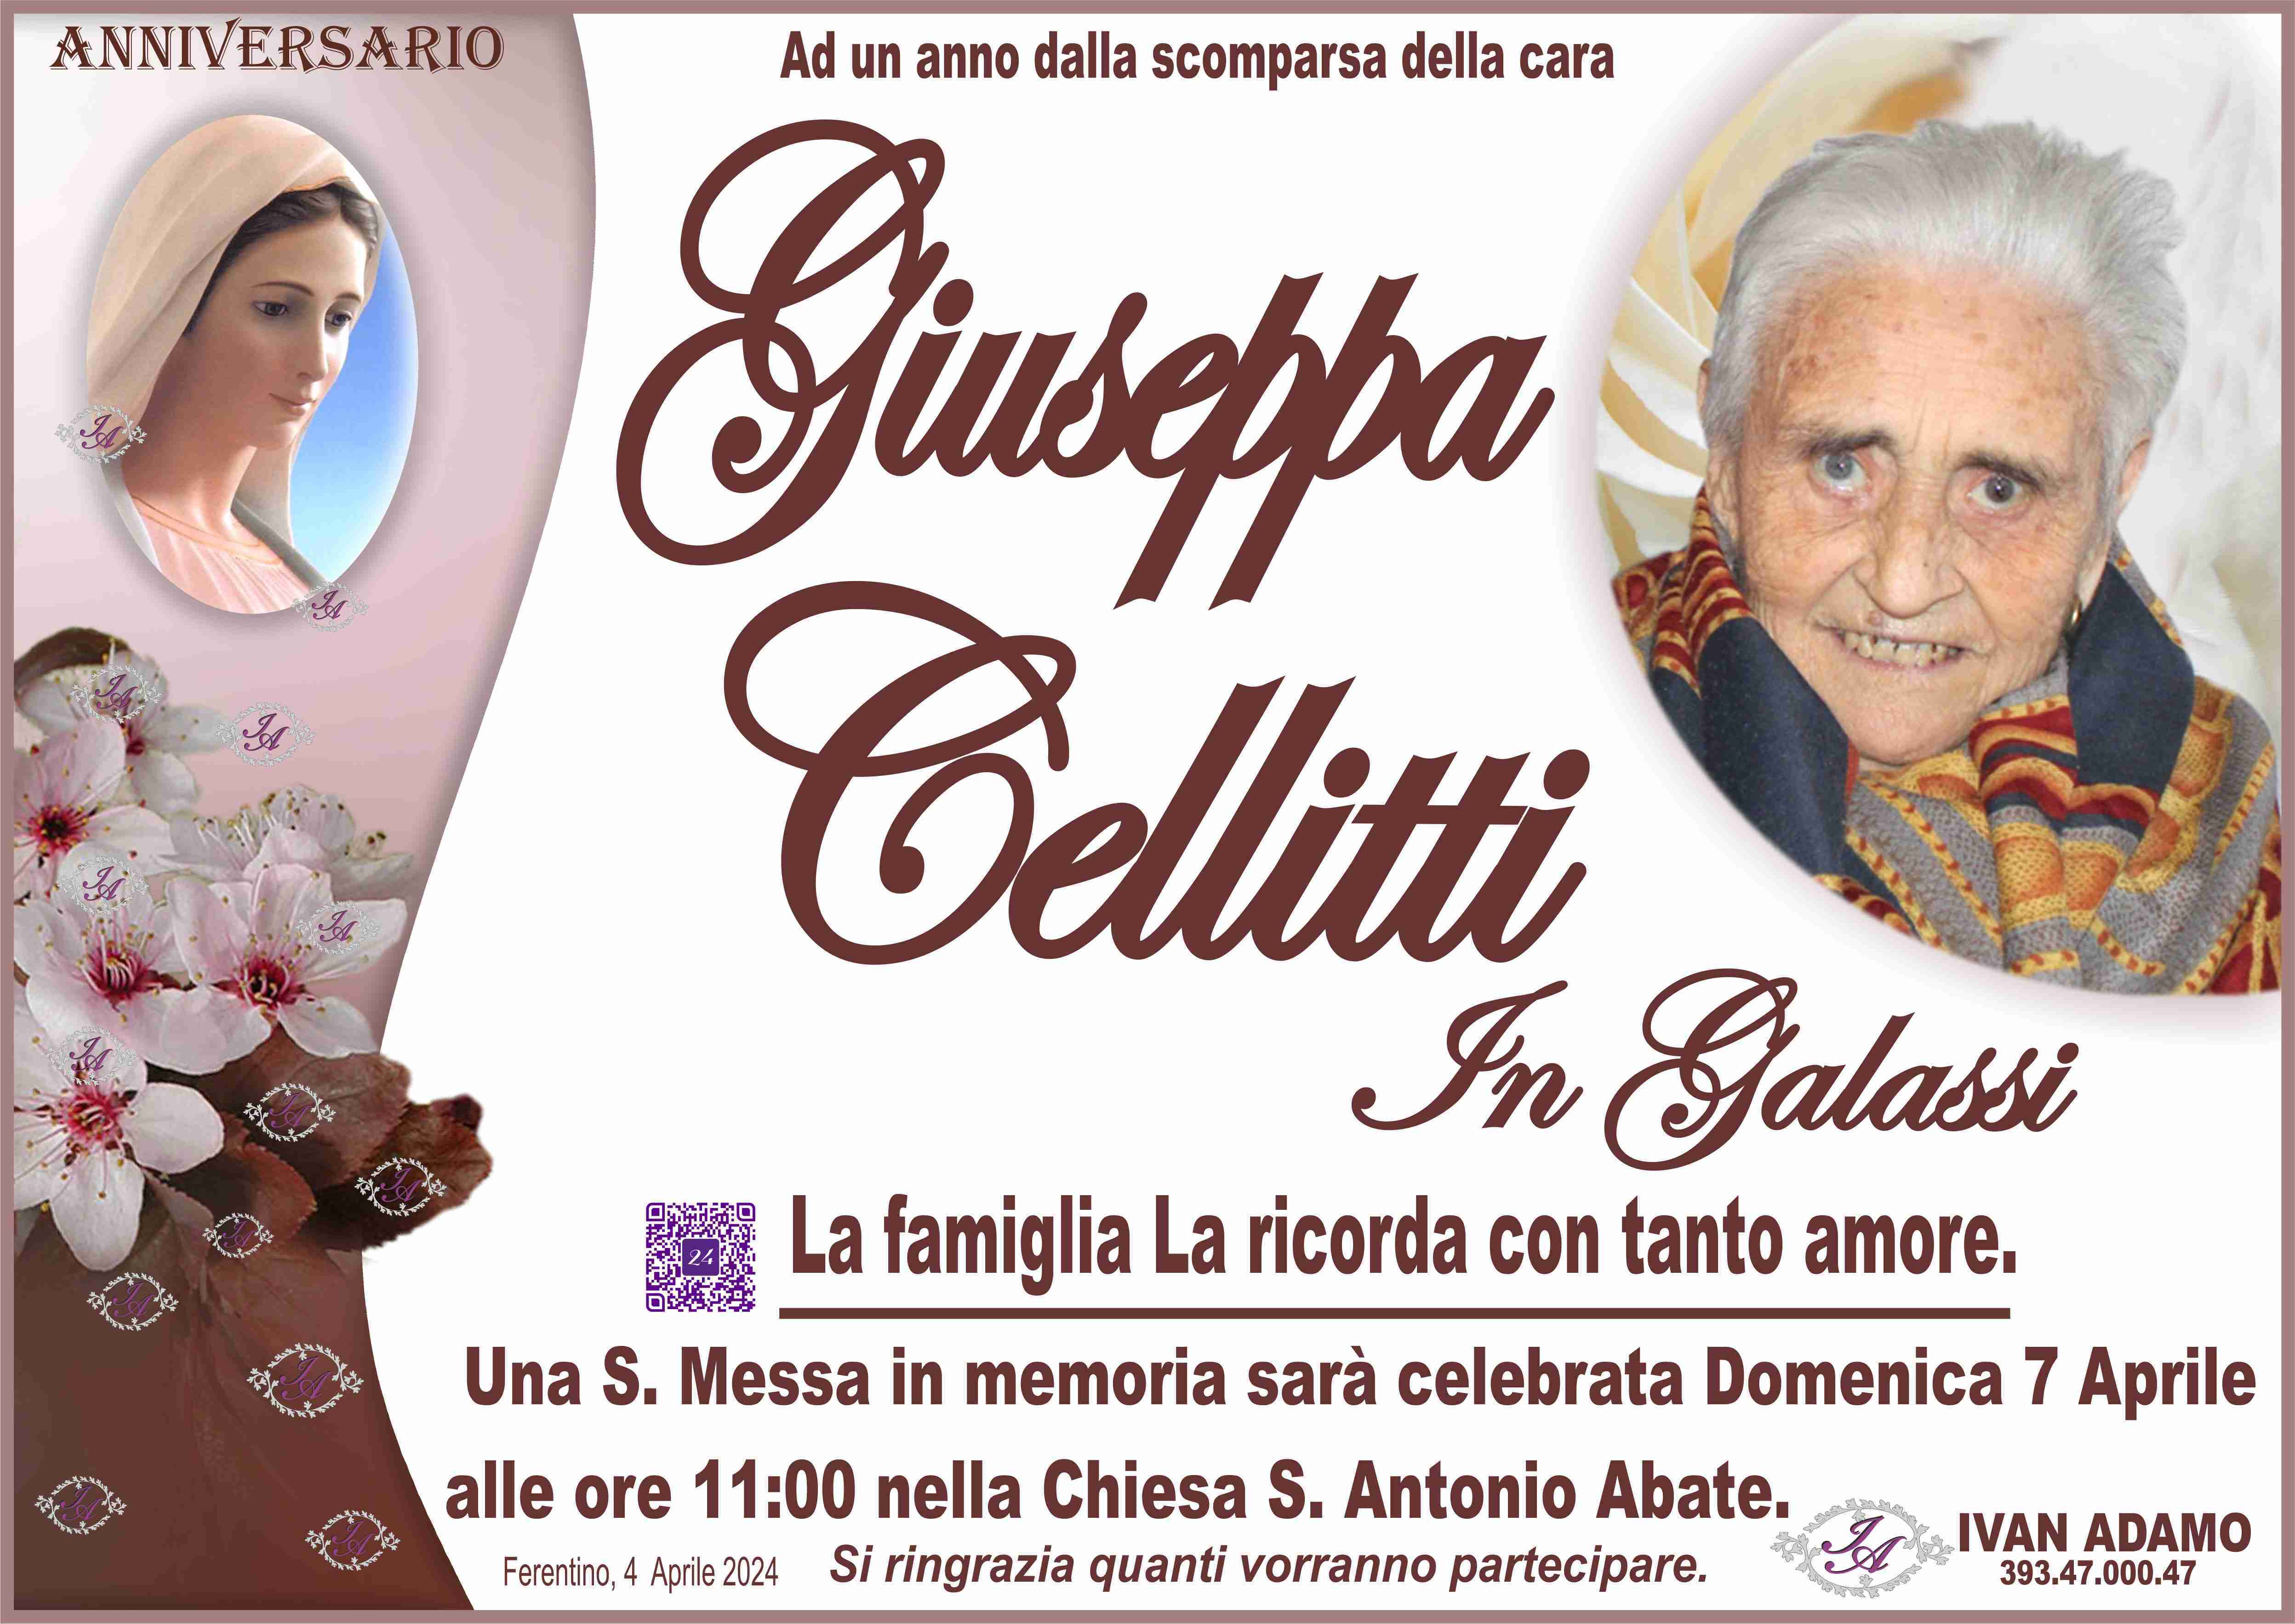 Giuseppa Cellitti